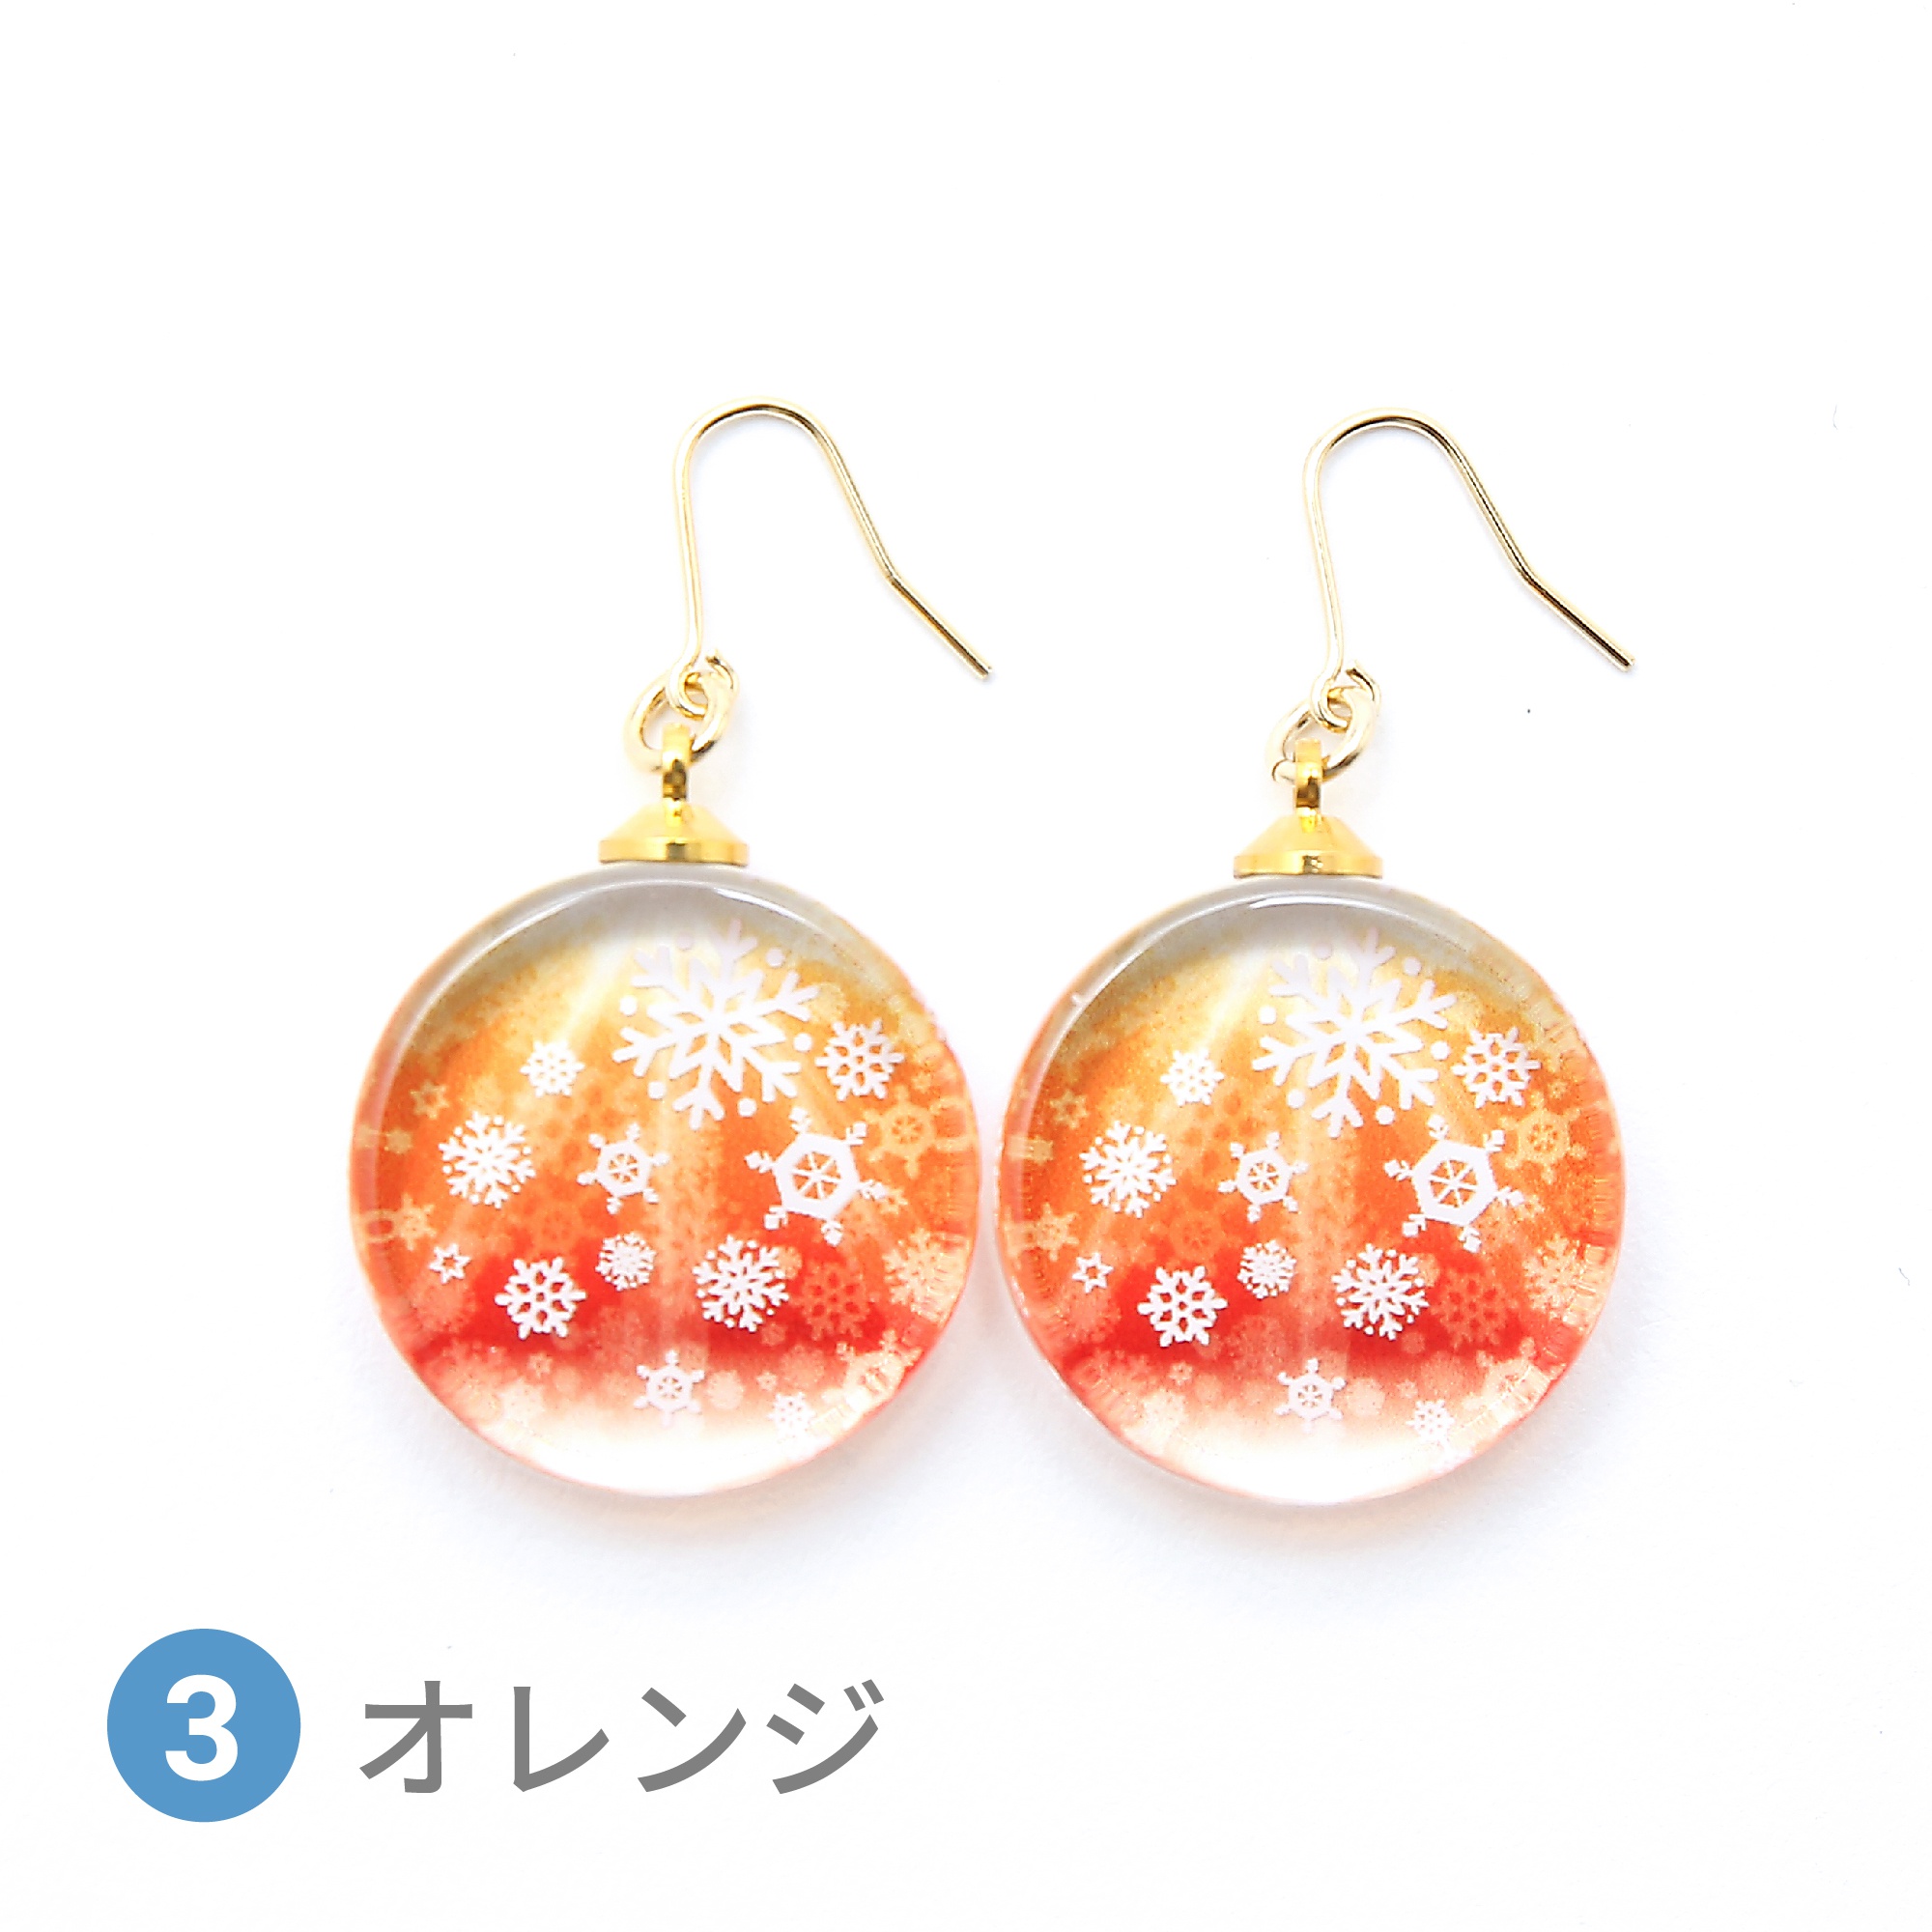 Glass accessories Pierced Earring Shiny winter orange round shape